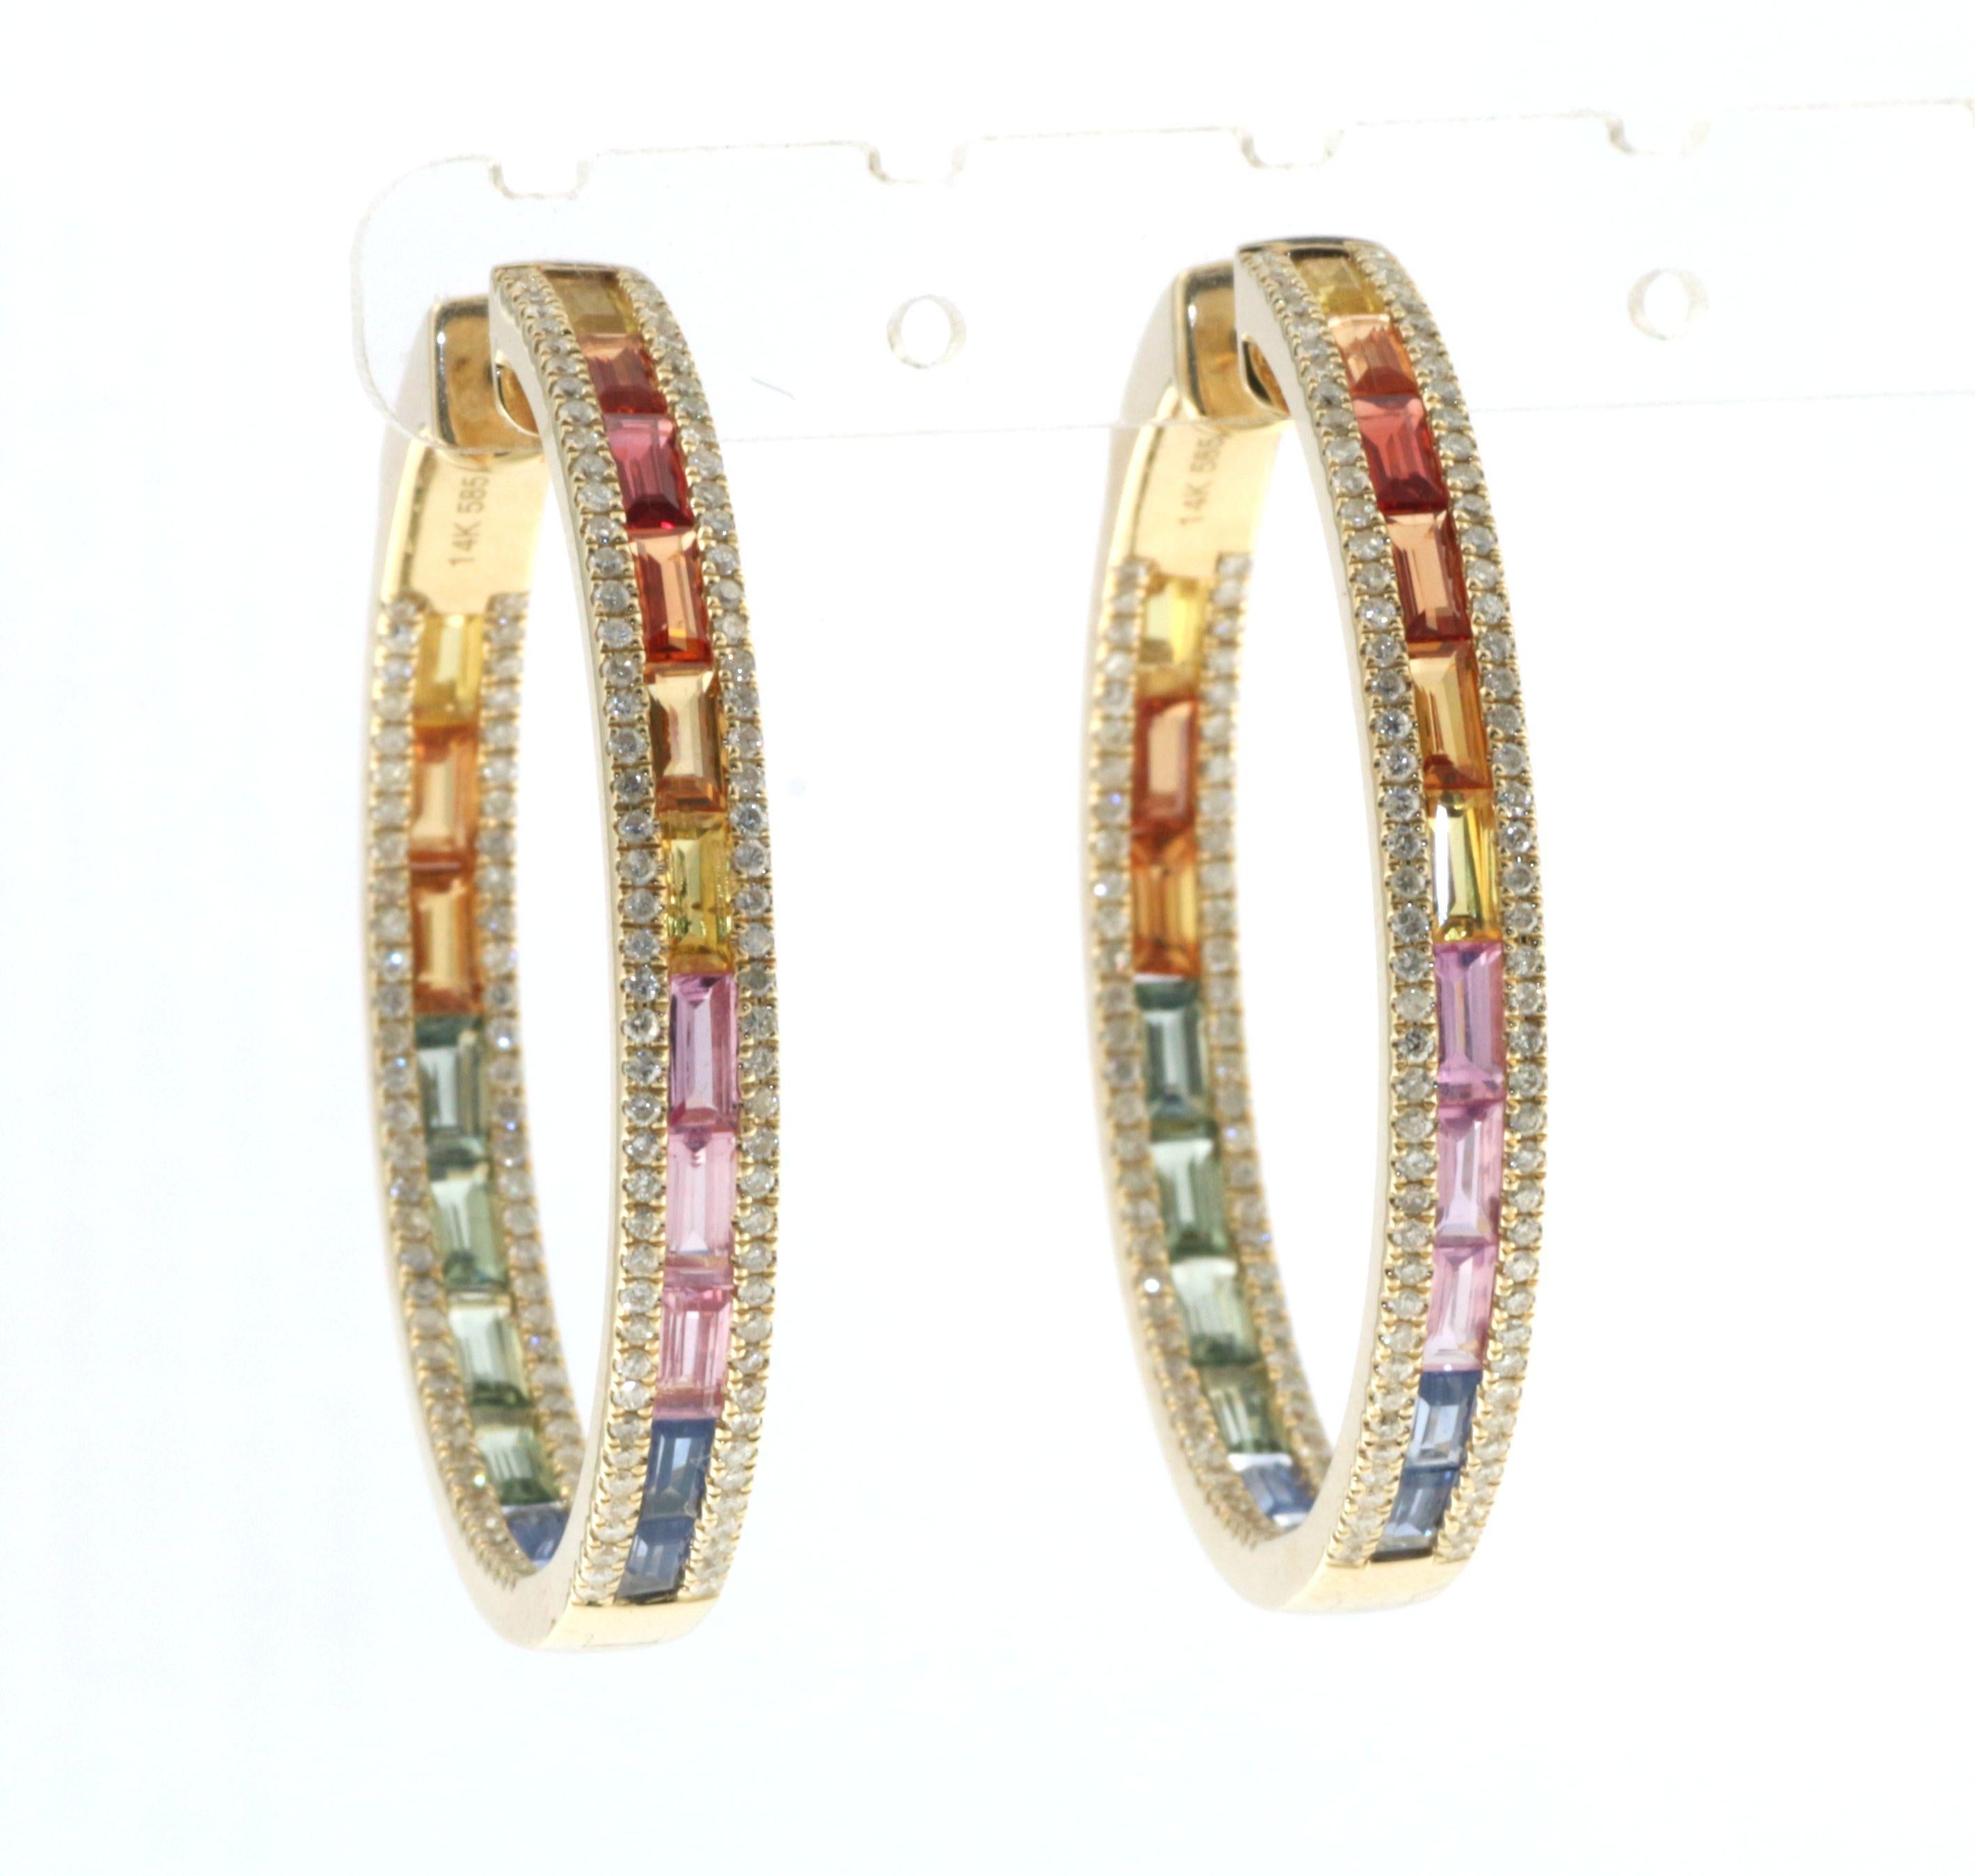 Contemporary Rainbow Sapphire Diamond Hoop Earrings in 14 Karat Yellow Gold